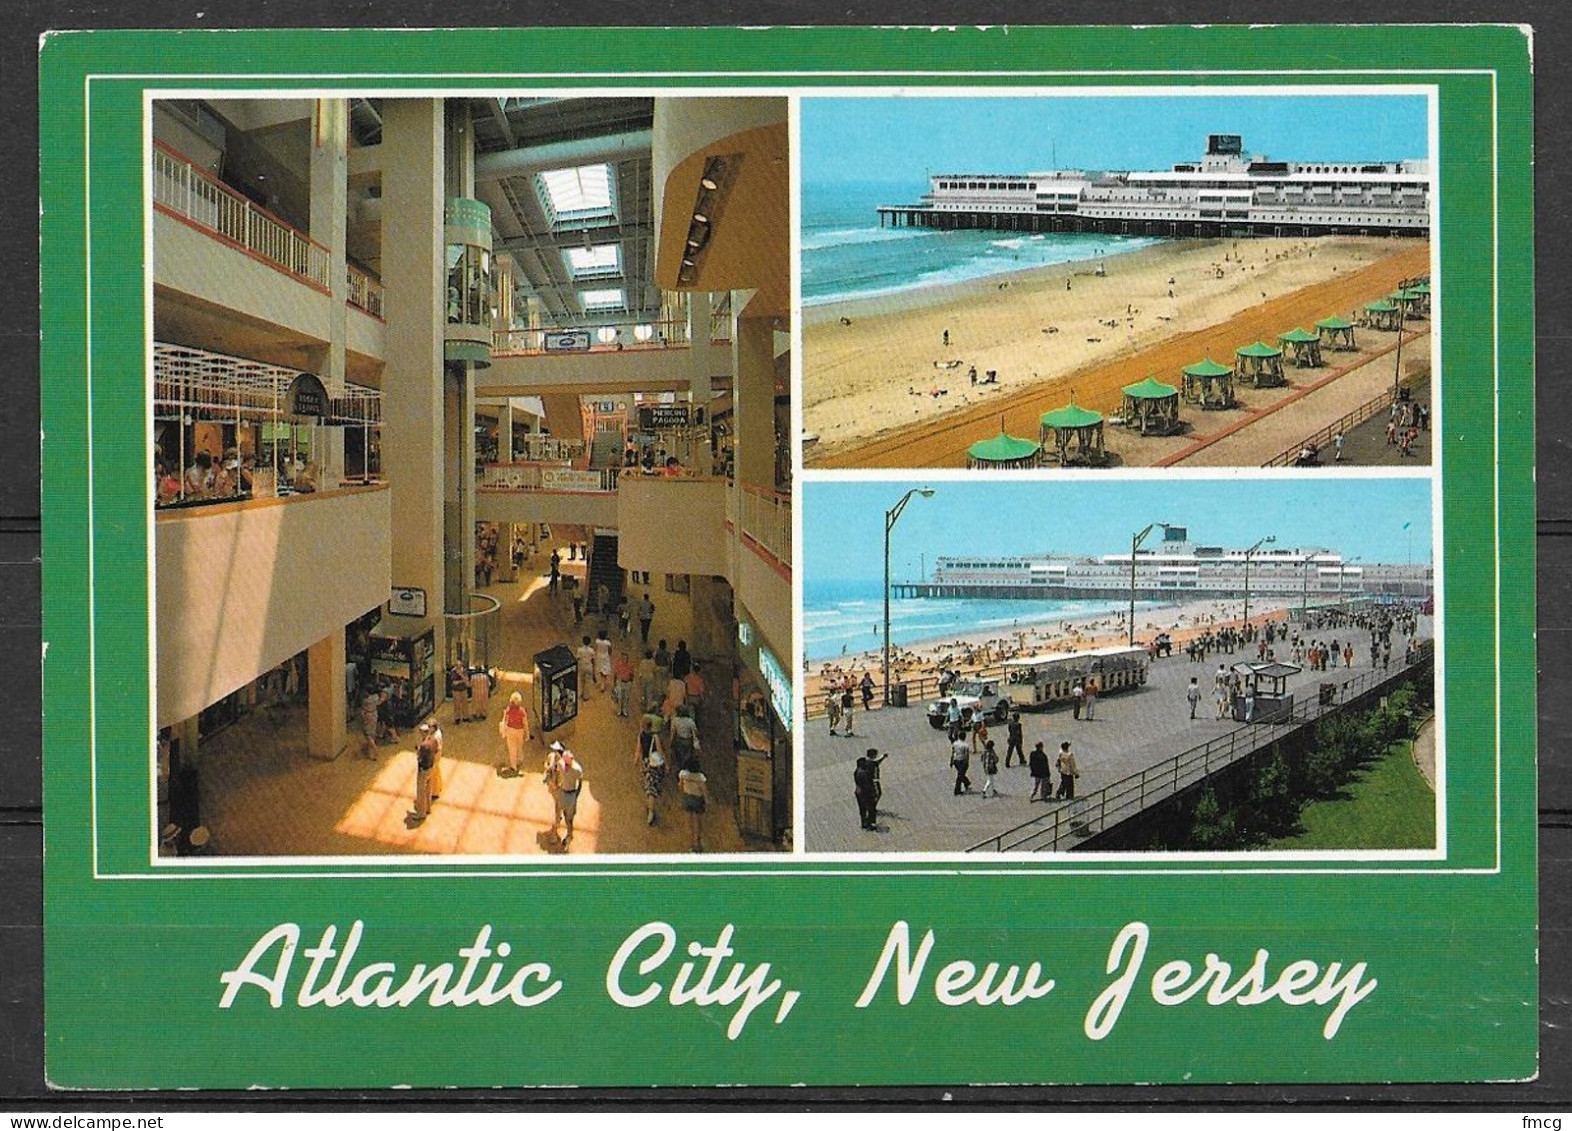 New Jersey, Atlantic City, Multiview, Unused - Atlantic City